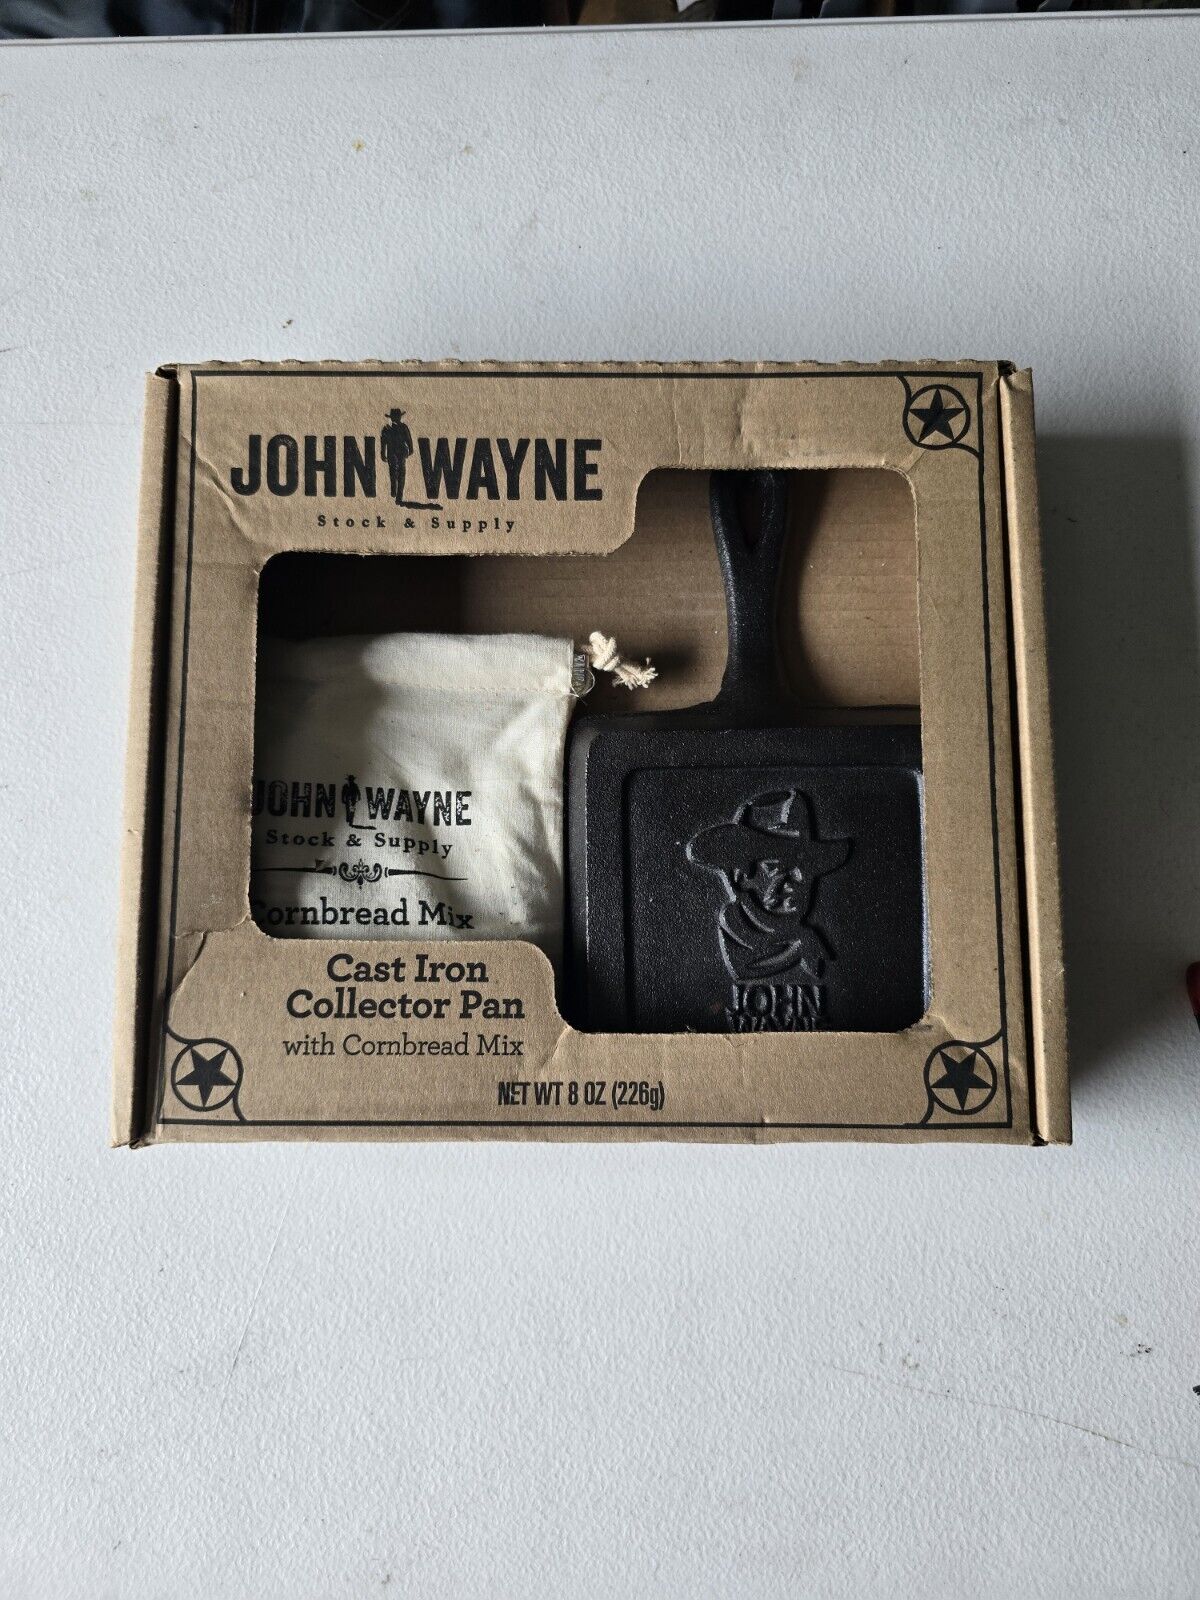 JOHN WAYNE COLLECTIBLES CAST IRON PAN 5.5 INCH SQUARE